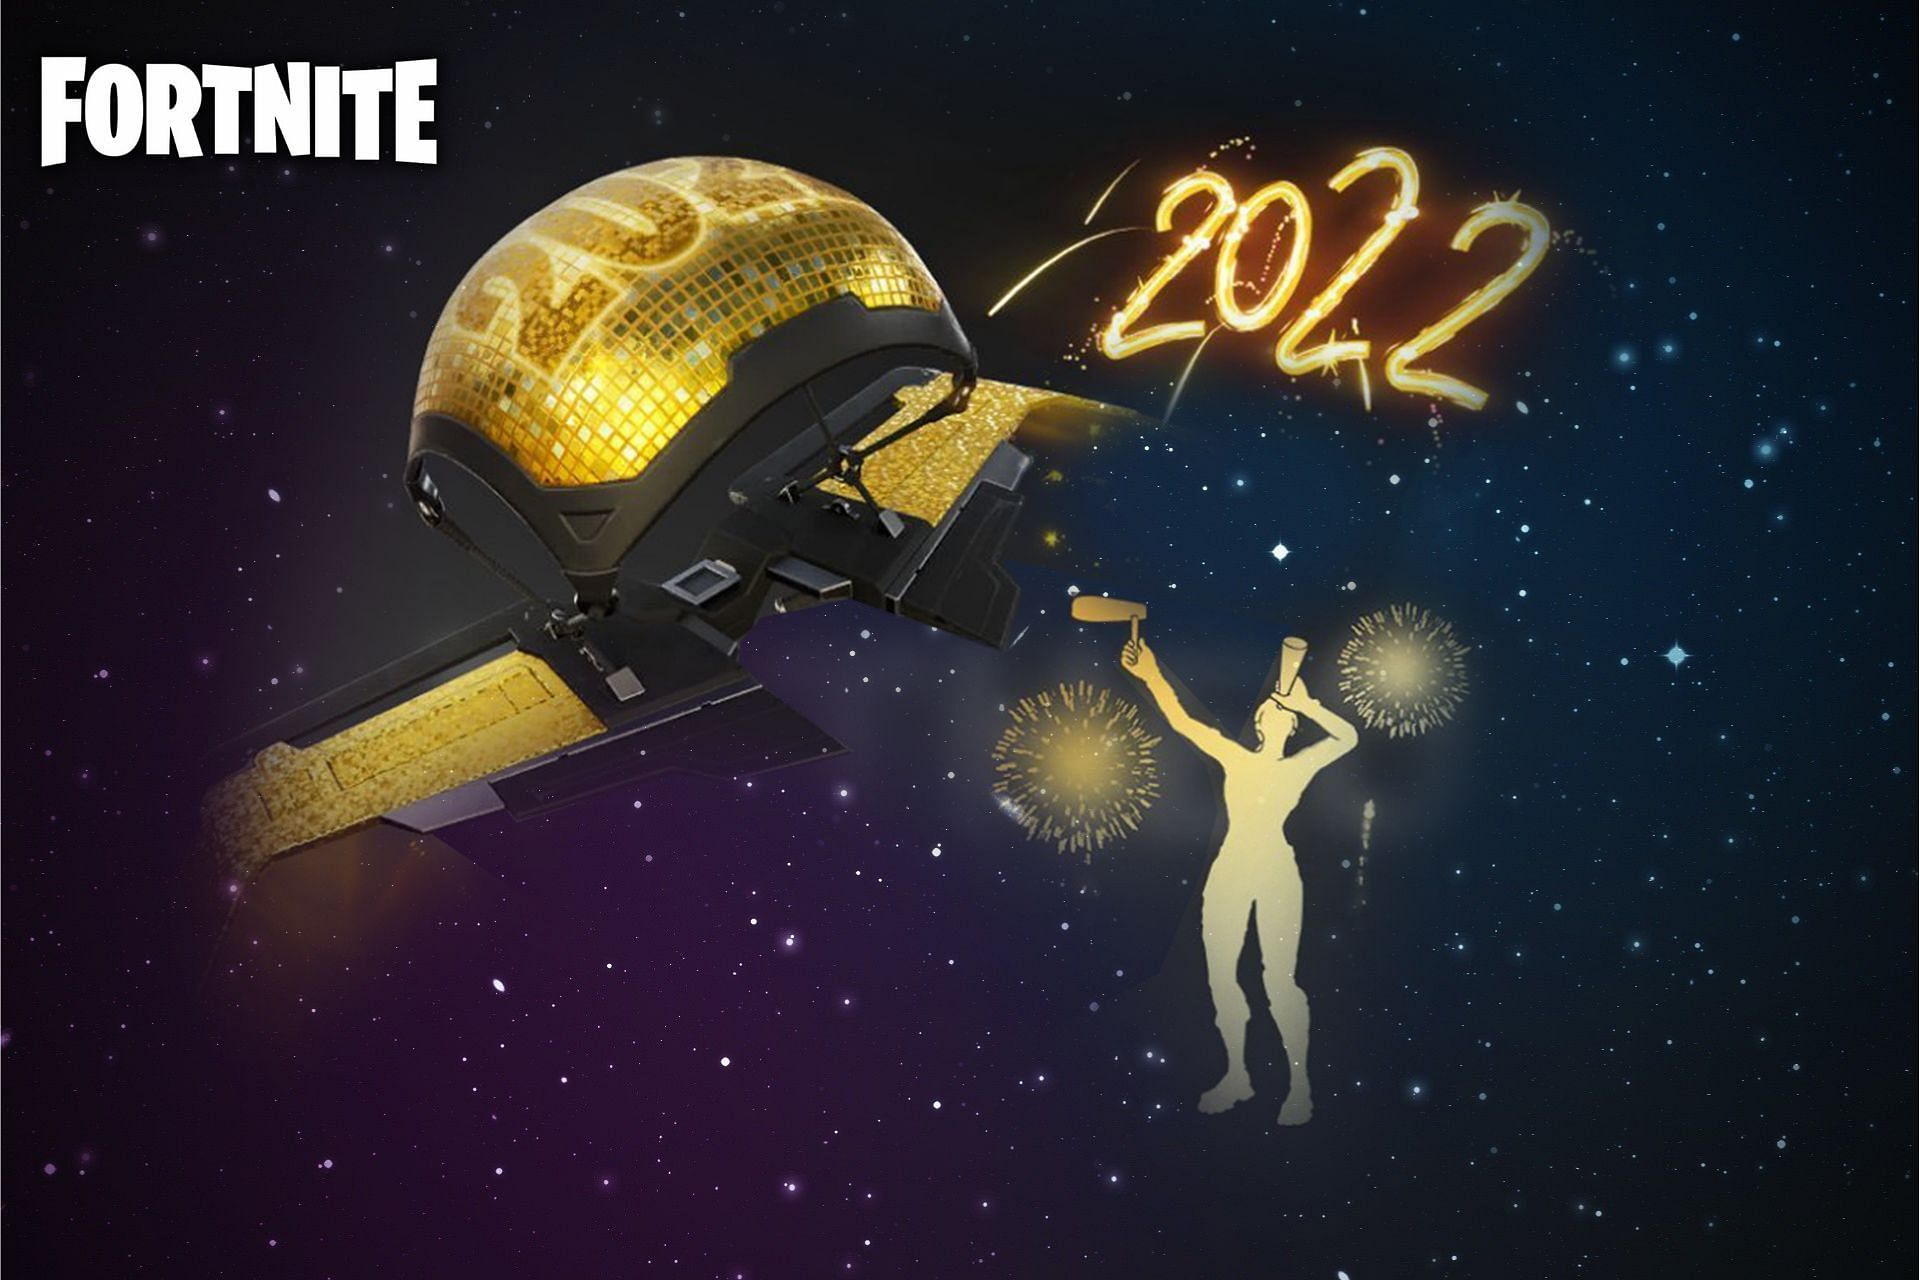 Fortnite New Year 2022 bundle revealed (Image via Sportskeeda)